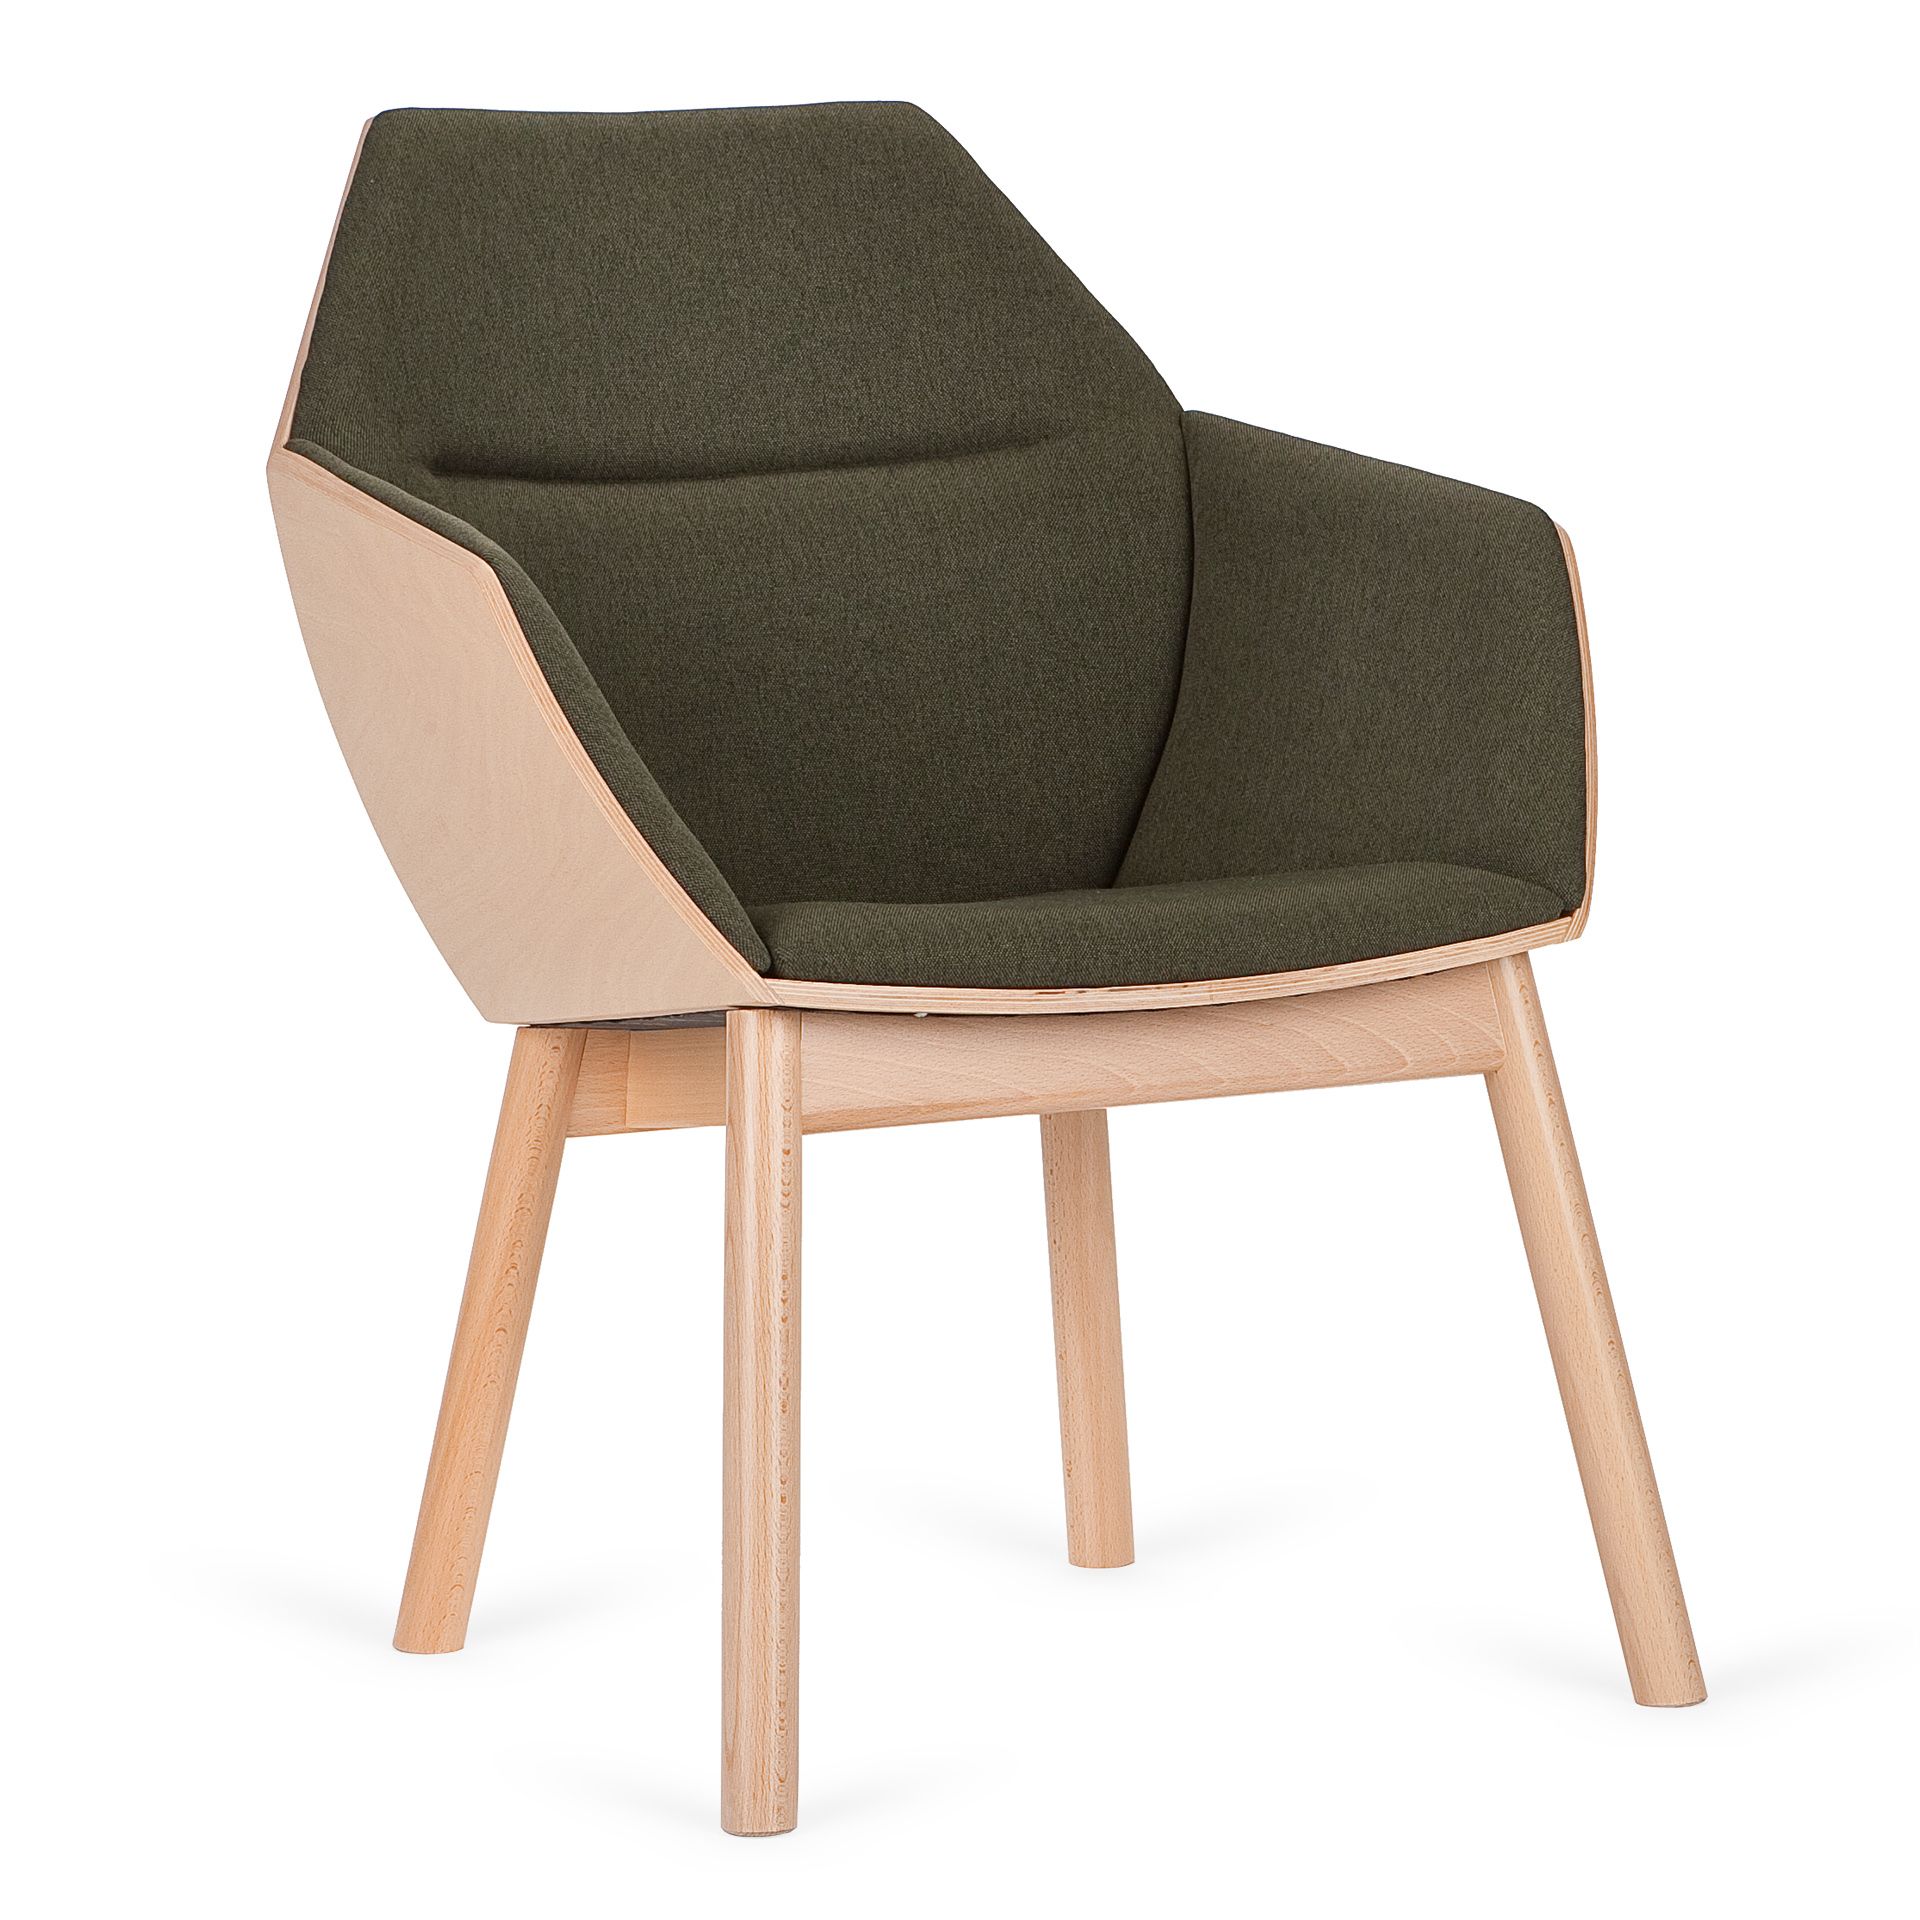 Paged купить. Стул Riva Chair m2001. Маленькое кресло для кафе. Лаунж кресло. HORECA Furniture.